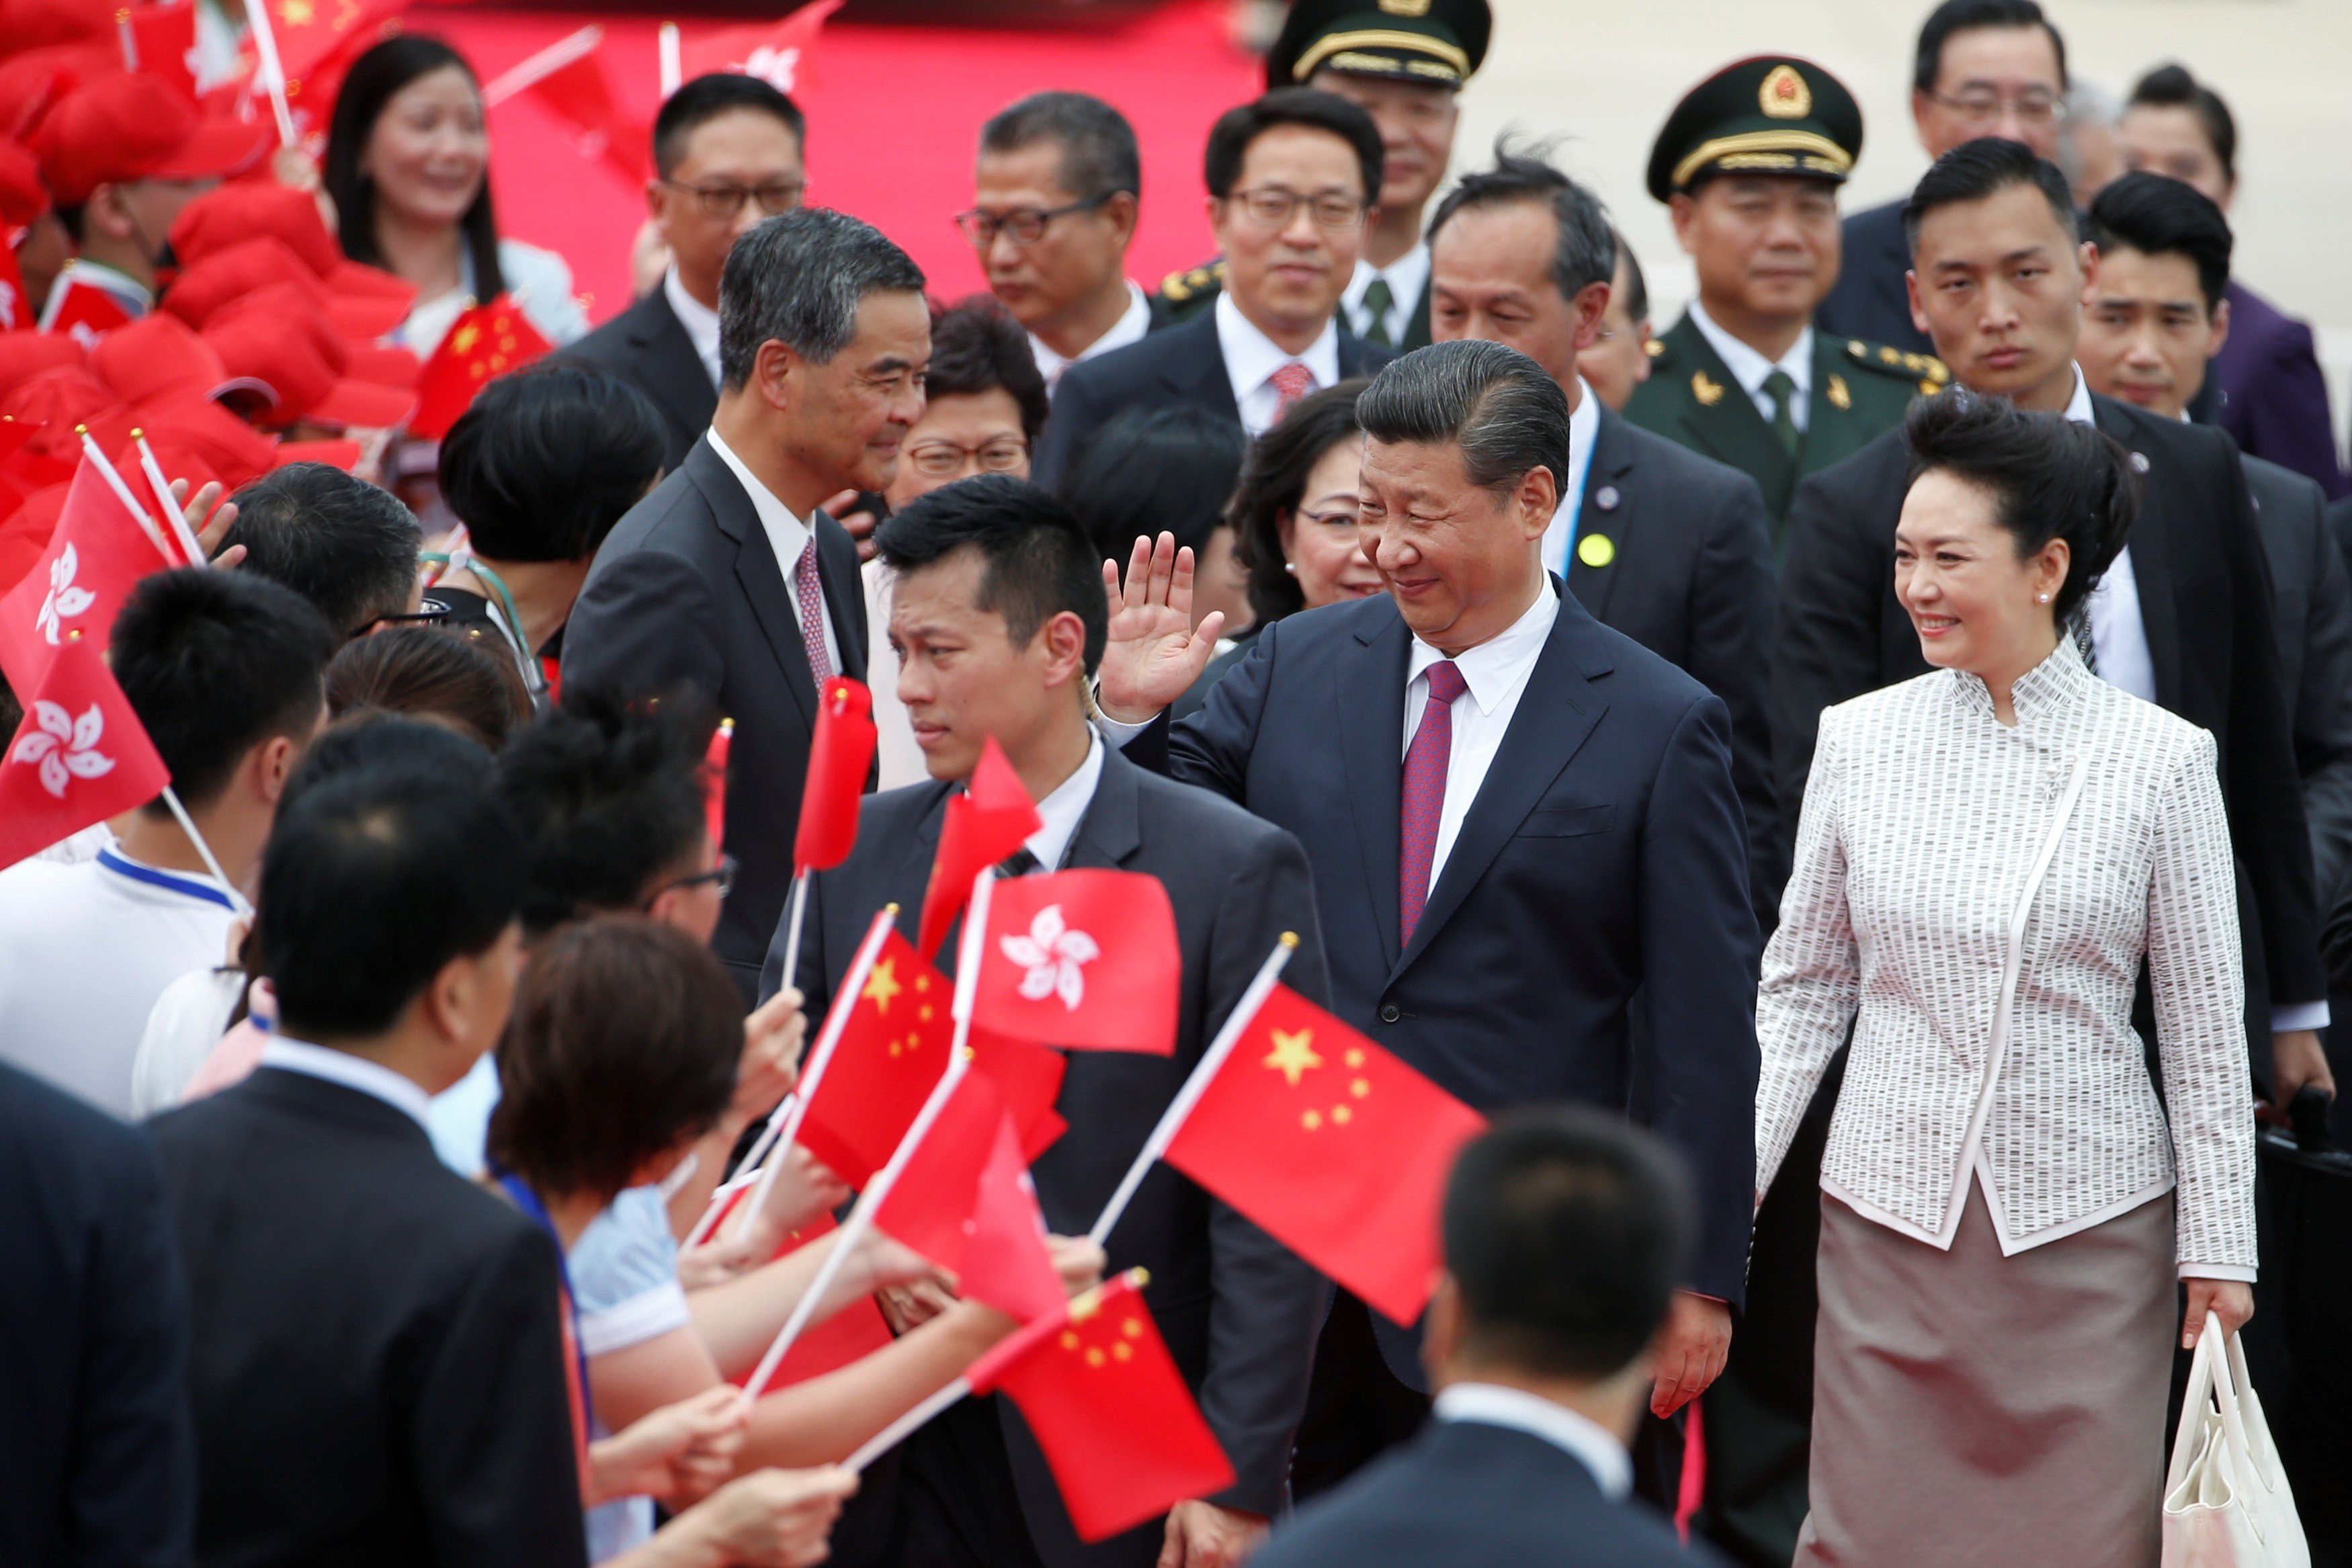 President Xi Jinping and his wife Peng Liyuan arriving at Hong Kong International Airport. Photo: Reuters